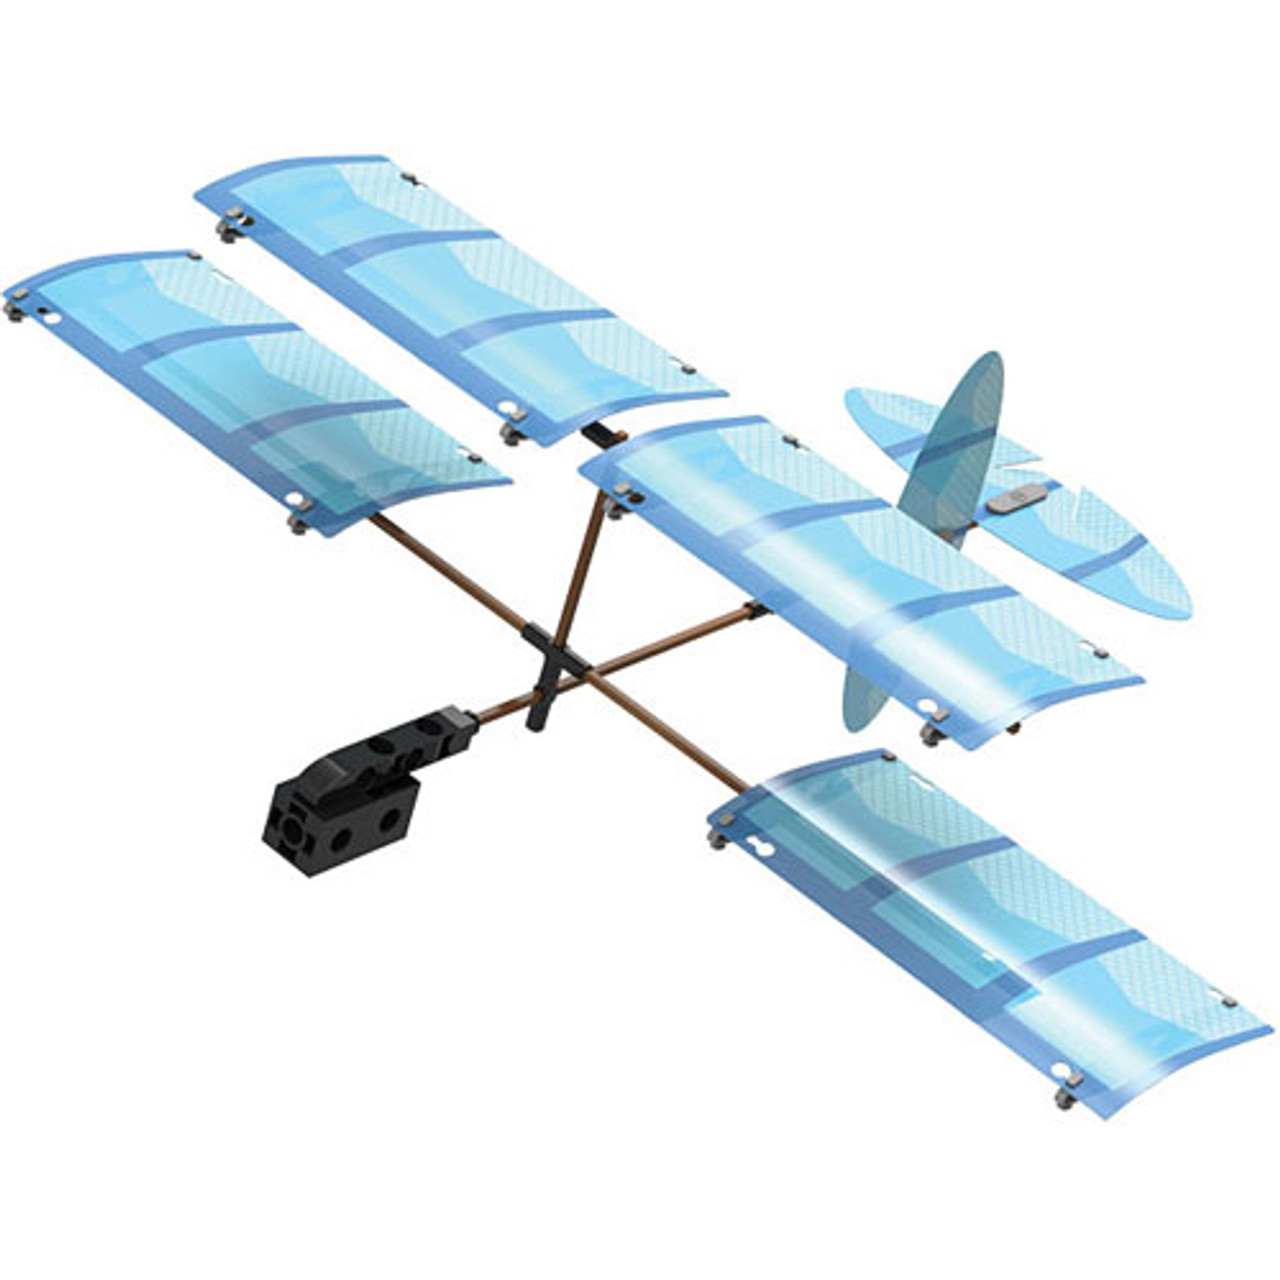 Geek & Co. Ultralight Airplanes 2